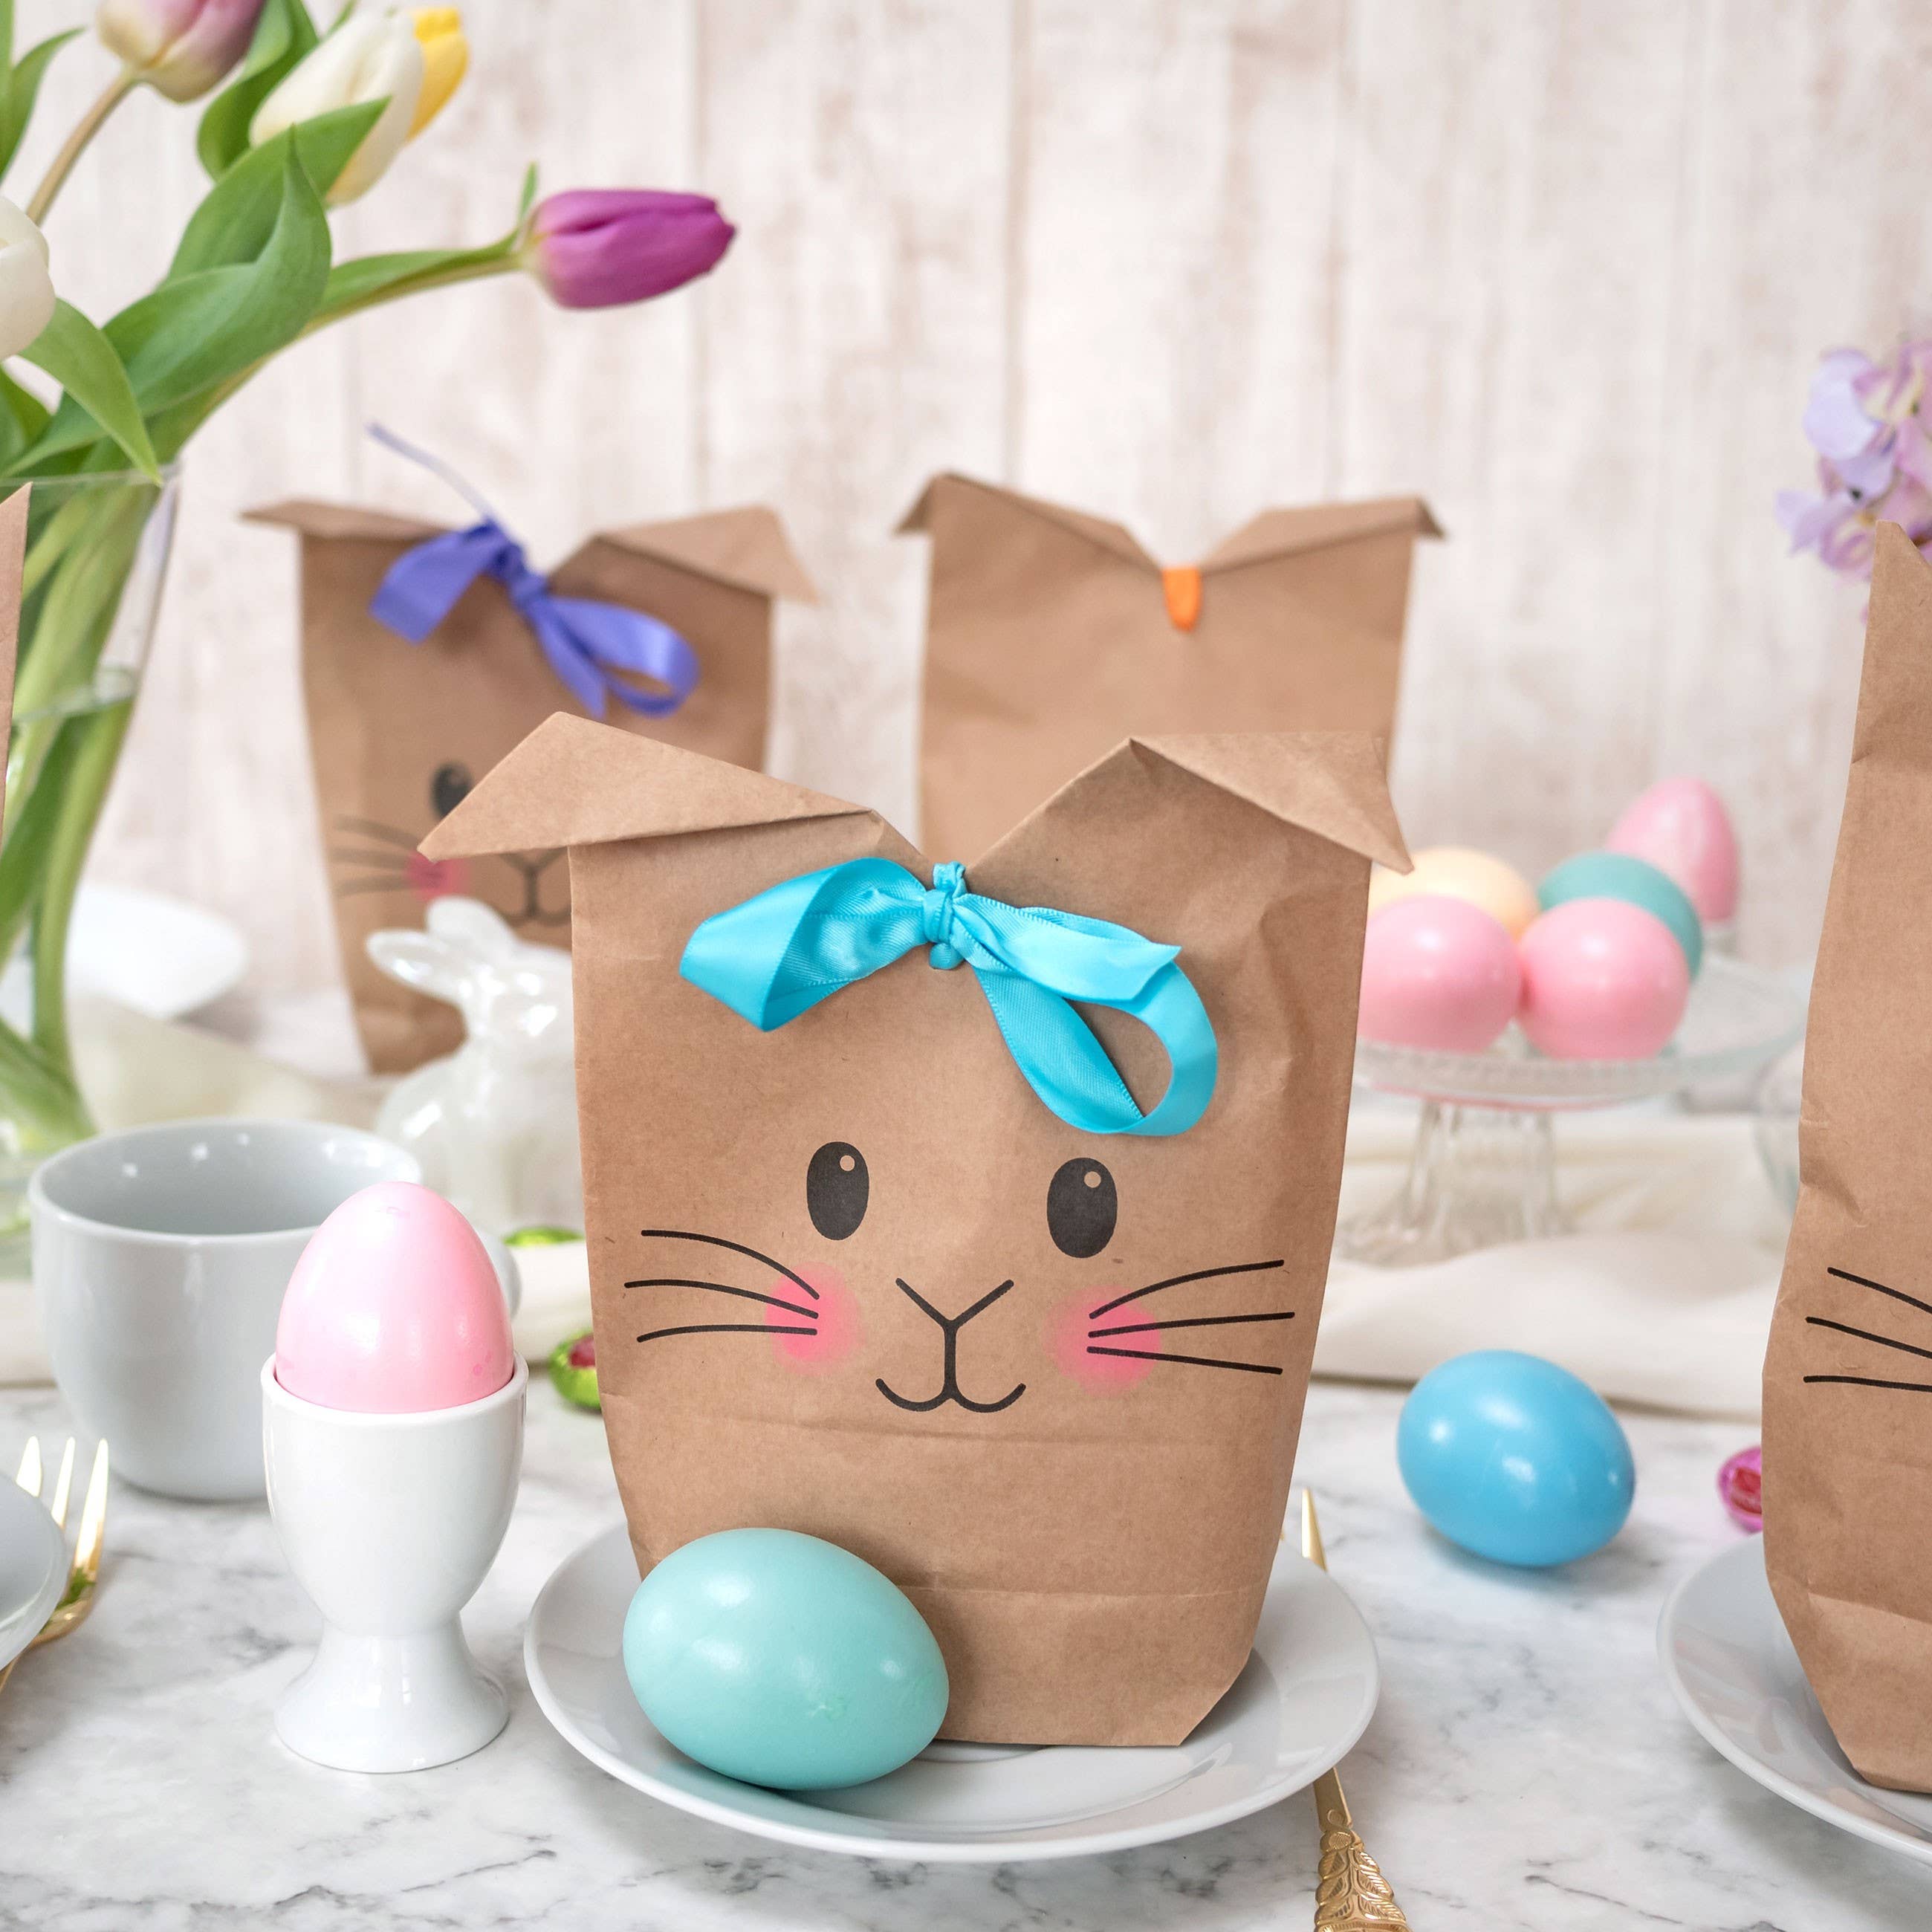 4 3 Bolsas con Orejas Nido de Pascua Alternativo con diseño de Conejo de Pascua Reutilizable Cesta de Pascua para llenar